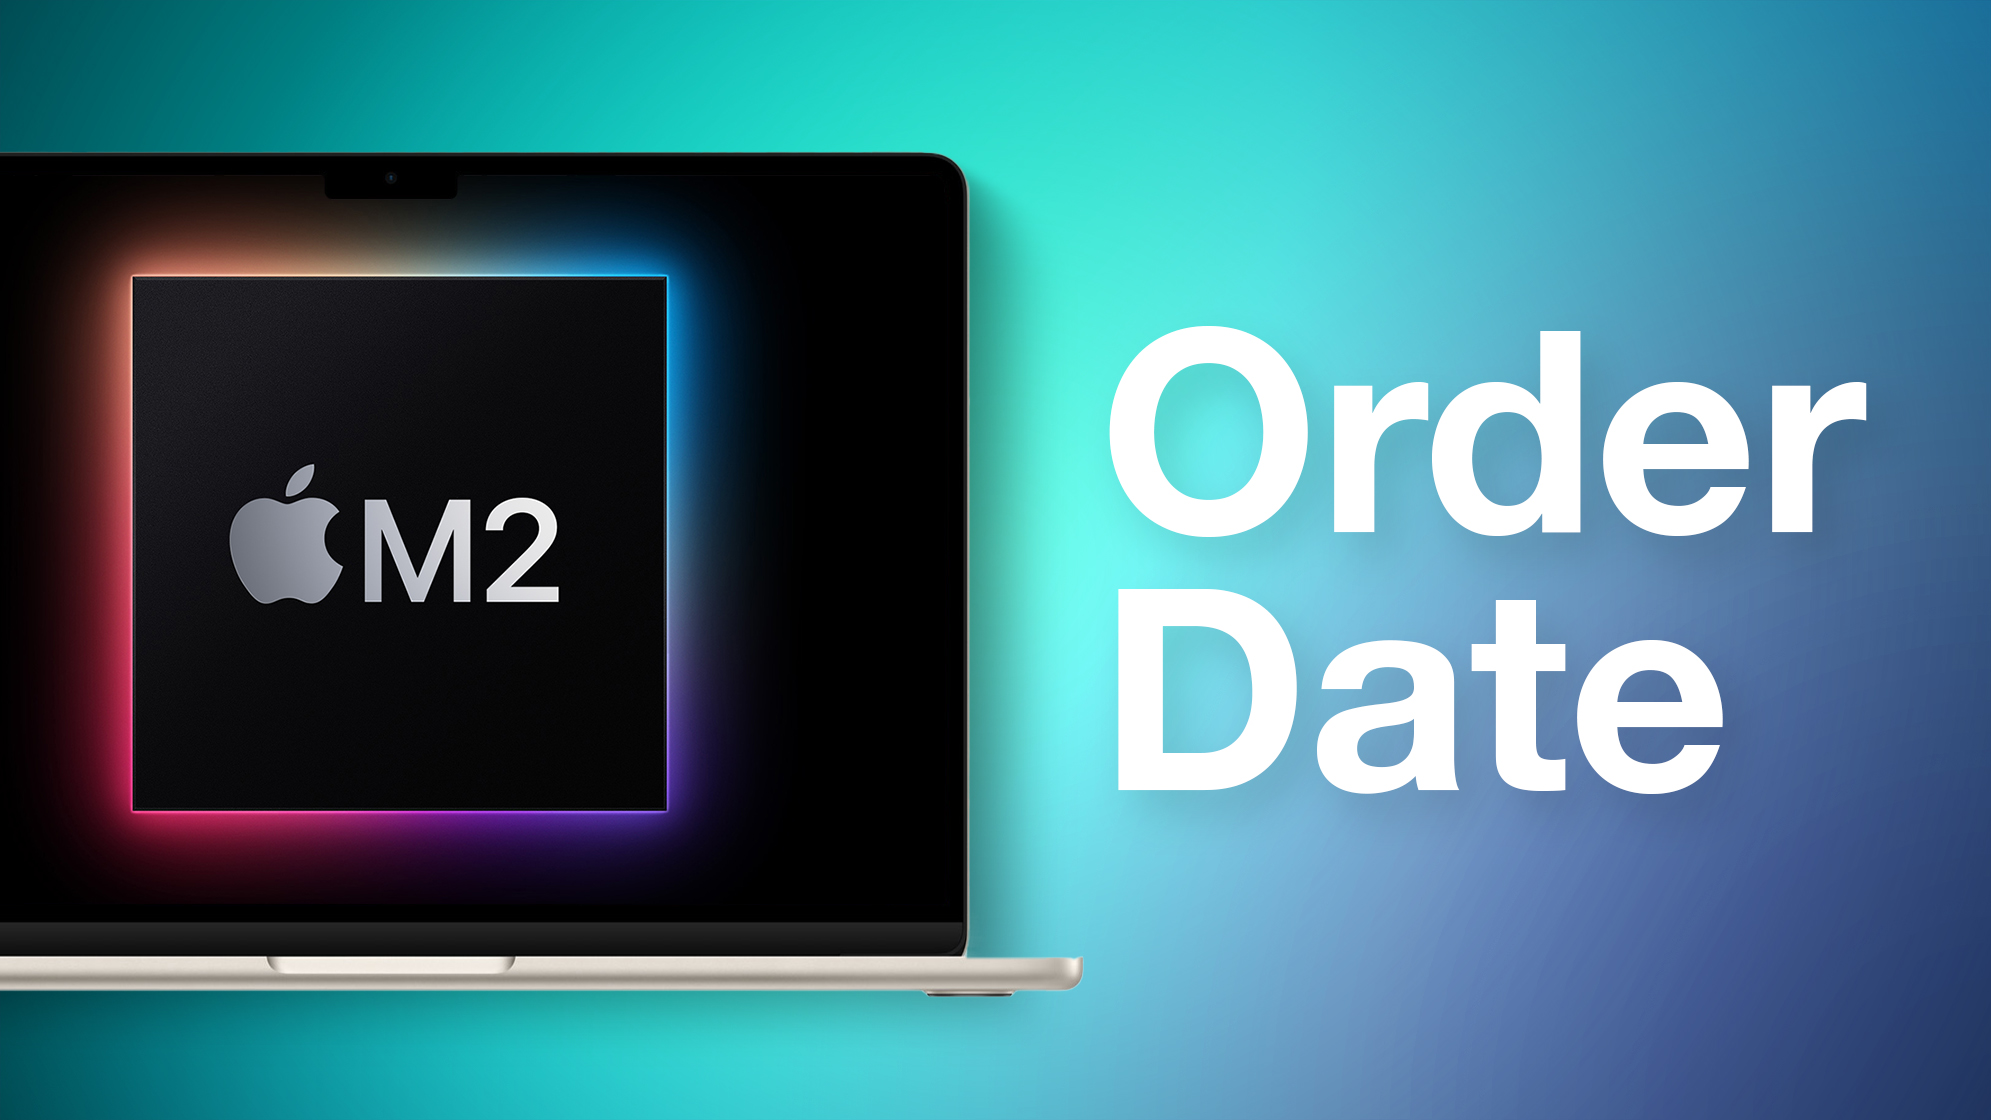 macbook-air-m2-order-date-feature.jpg